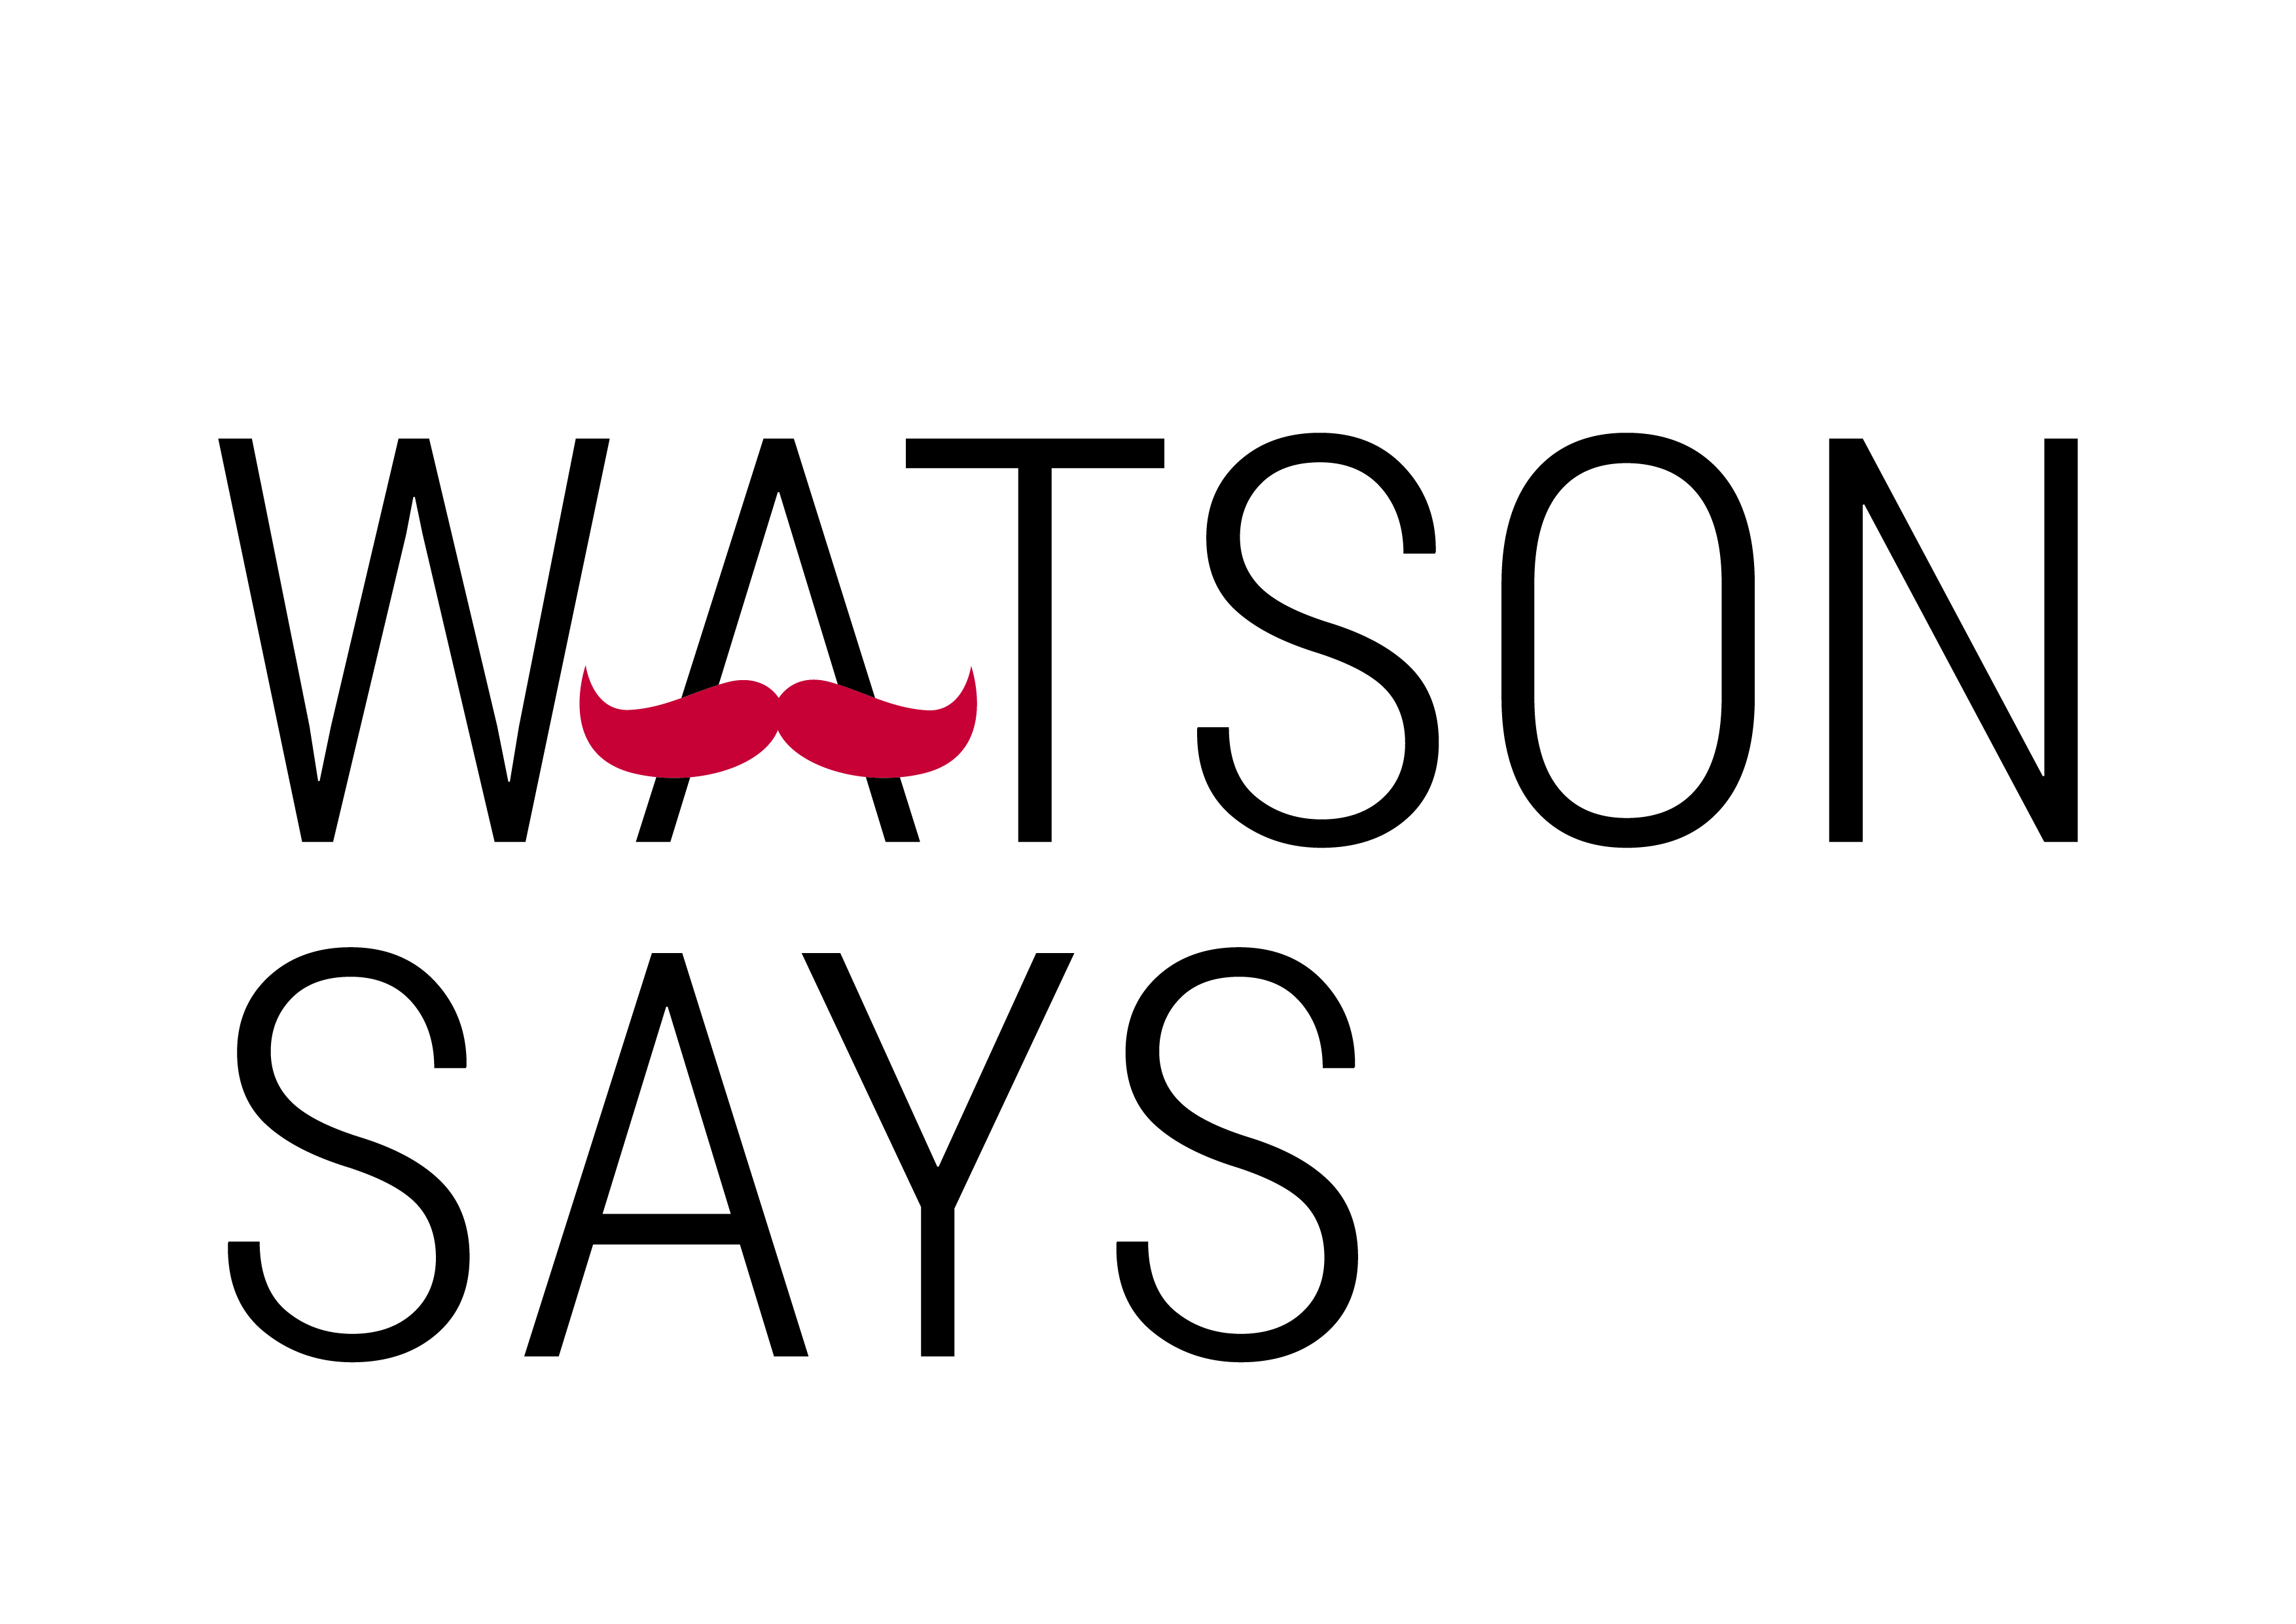 WATSON SAYS